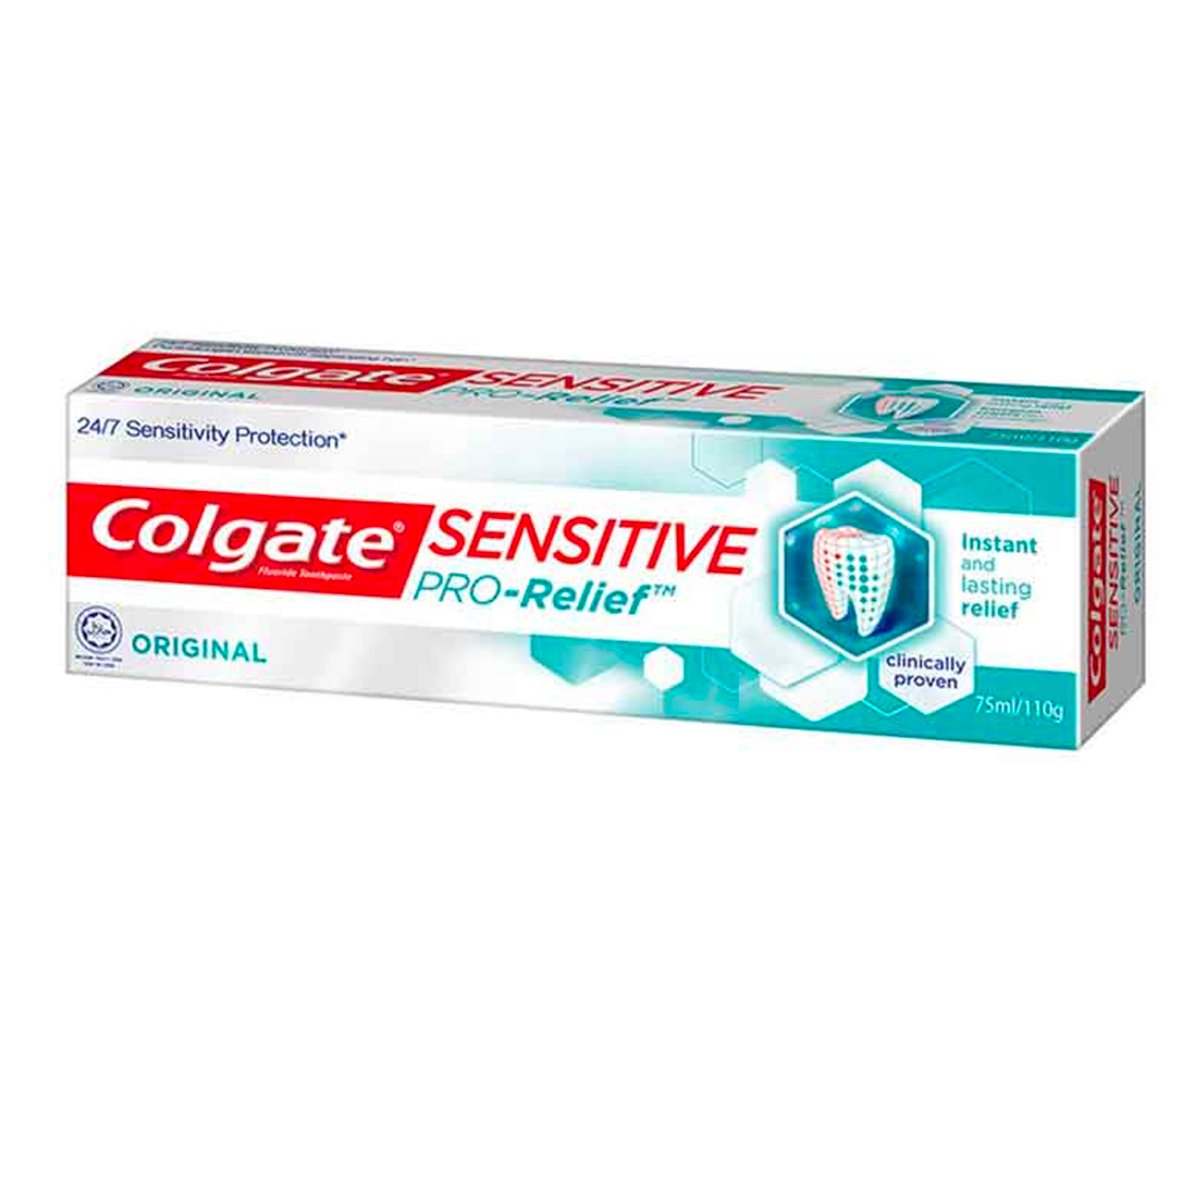 Colgate Toothpaste Sensitive Pro-Relief Original 110g